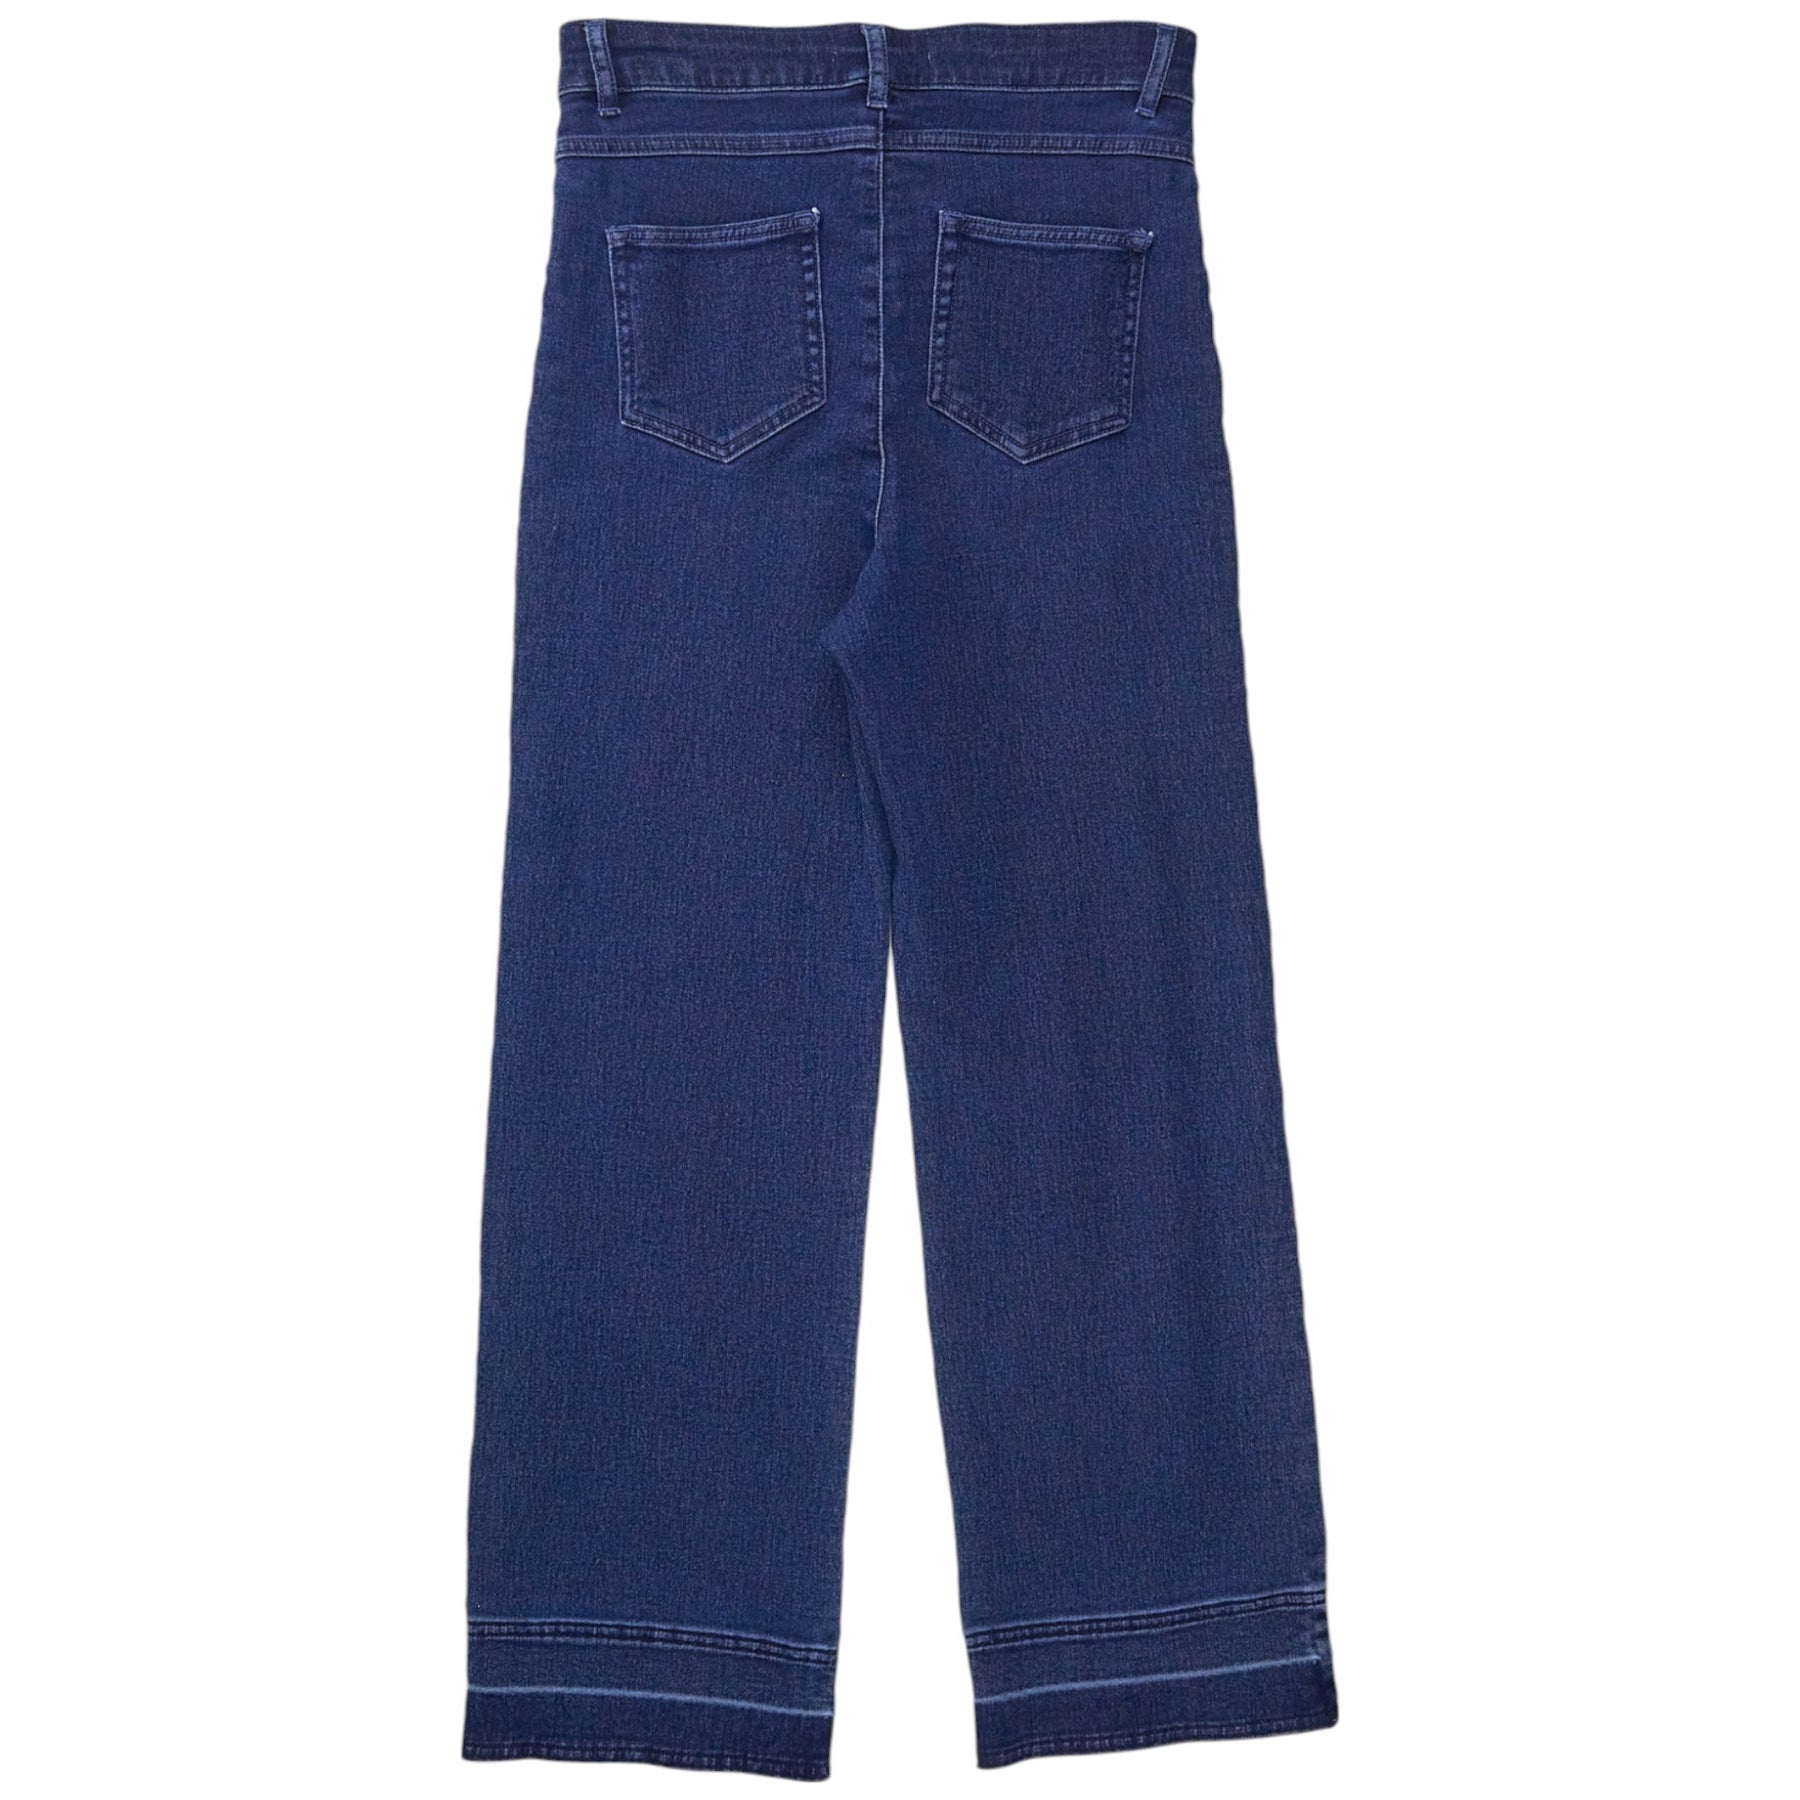 NRBY Blue Jet Denim Jeans